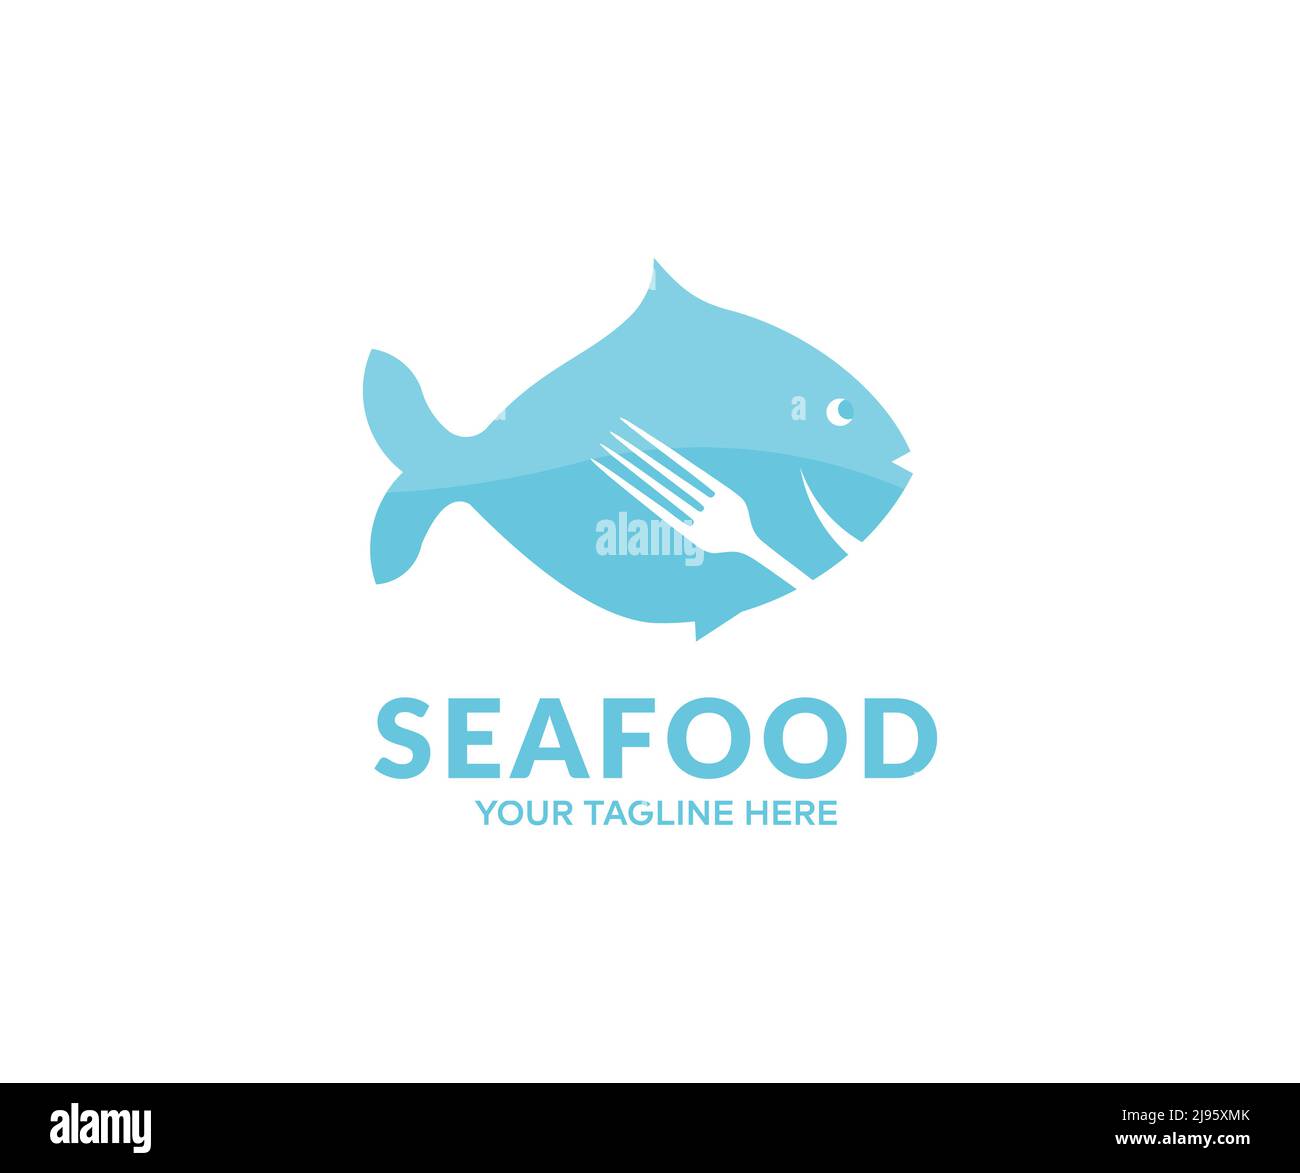 Un diseño de logotipo de pescado fresco o marisco. Menú de alimentos, diseño de vectores de pescado fresco e ilustración. Ilustración del Vector